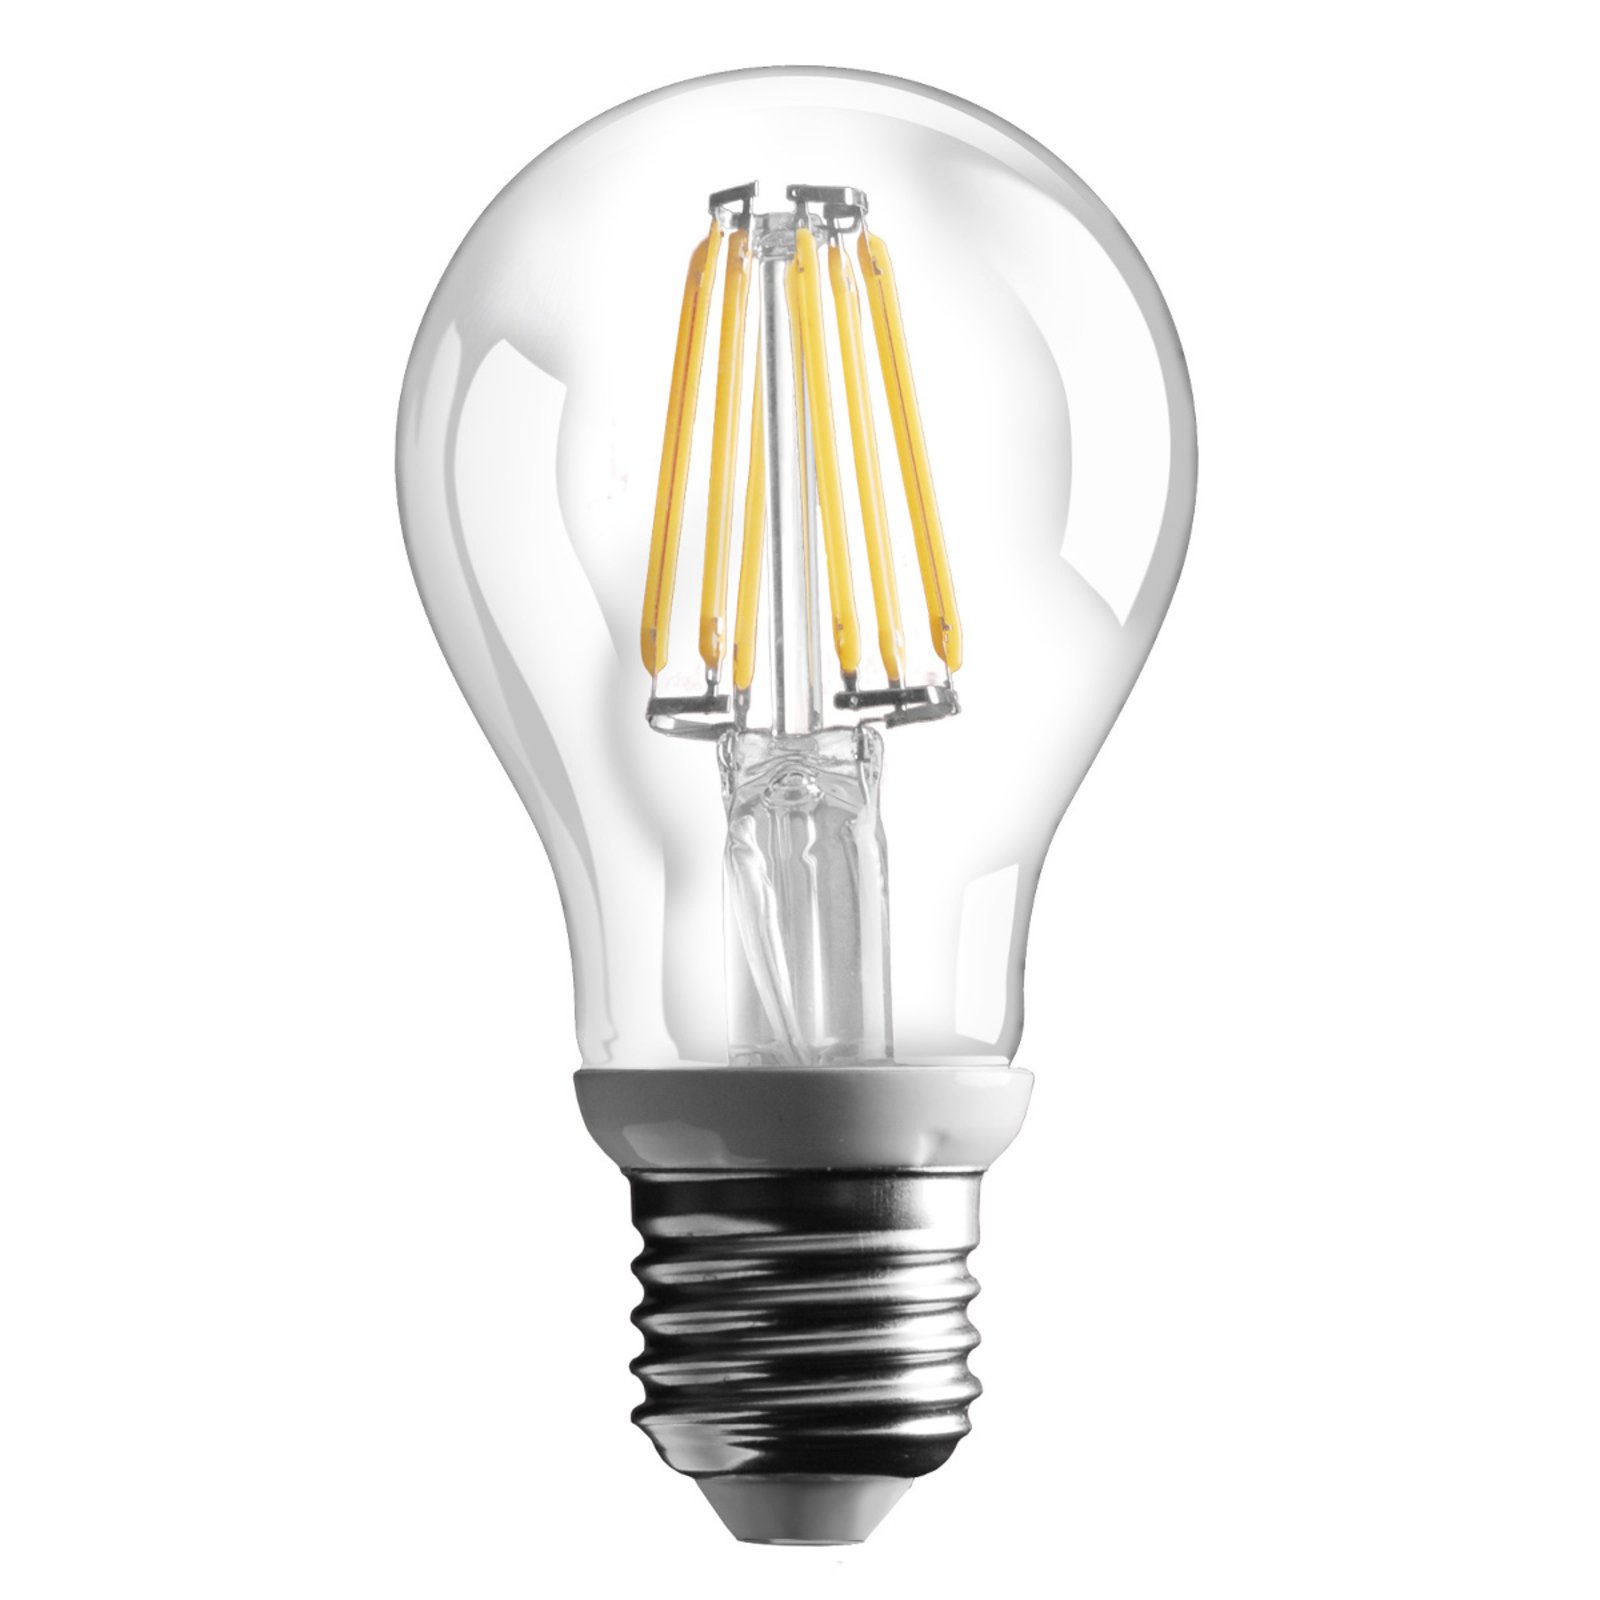 E27 6 W LED bulb filament with 800 lm, warm white